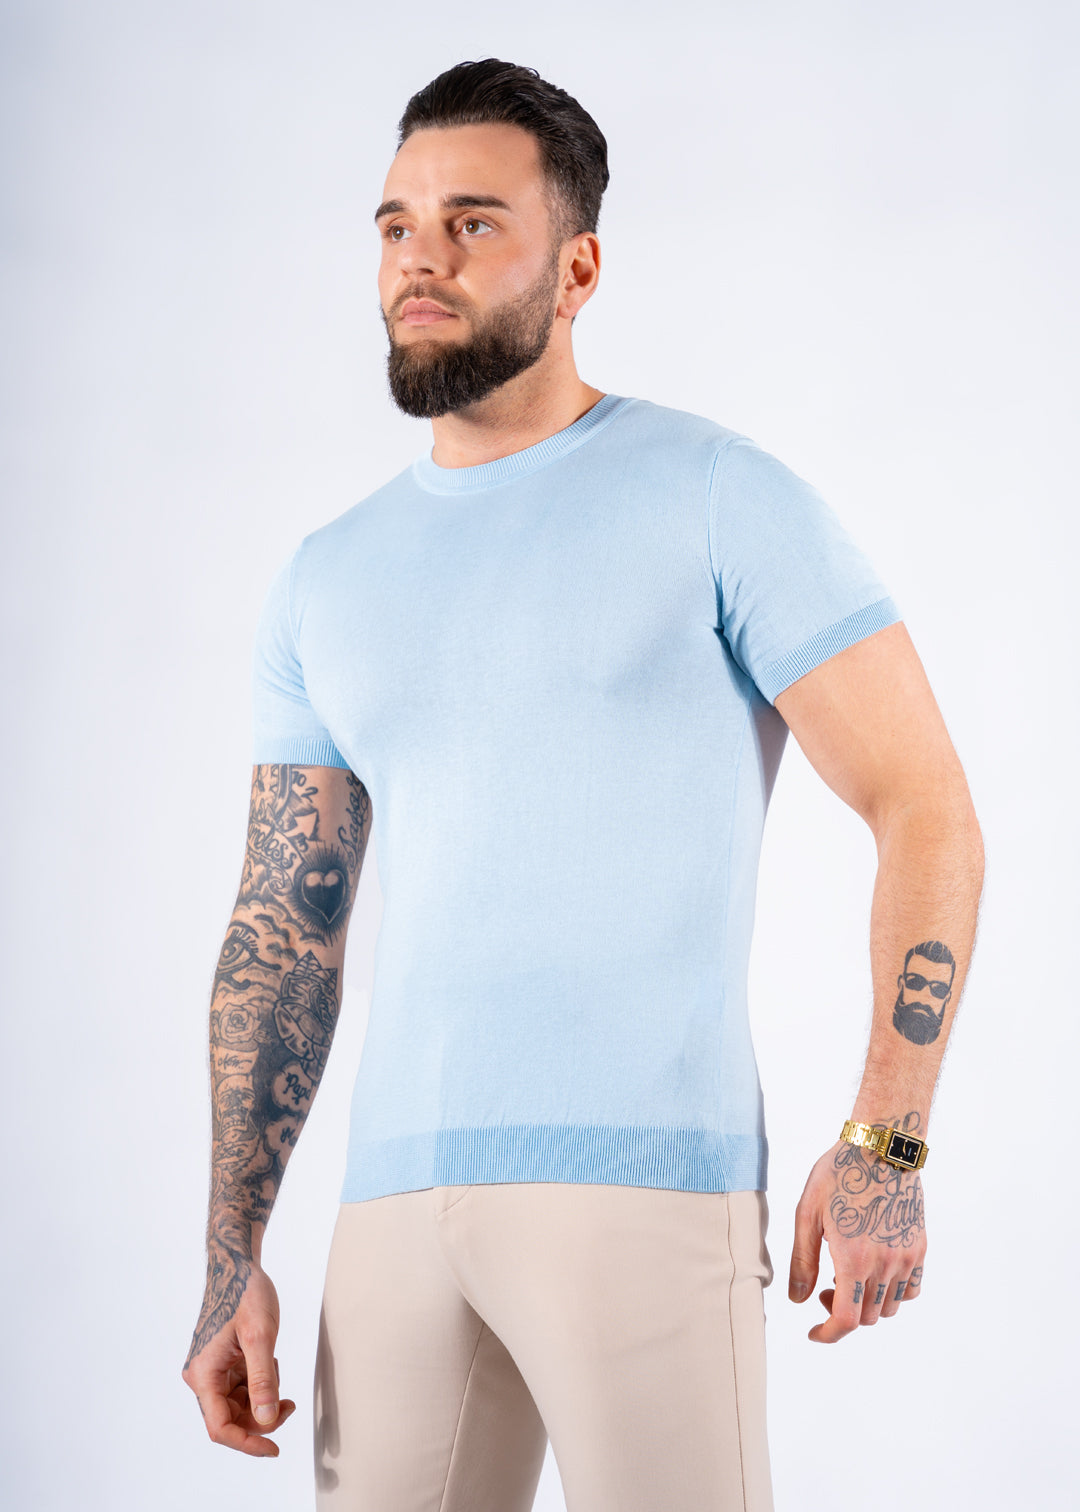 T-shirt knitwear licht blauw